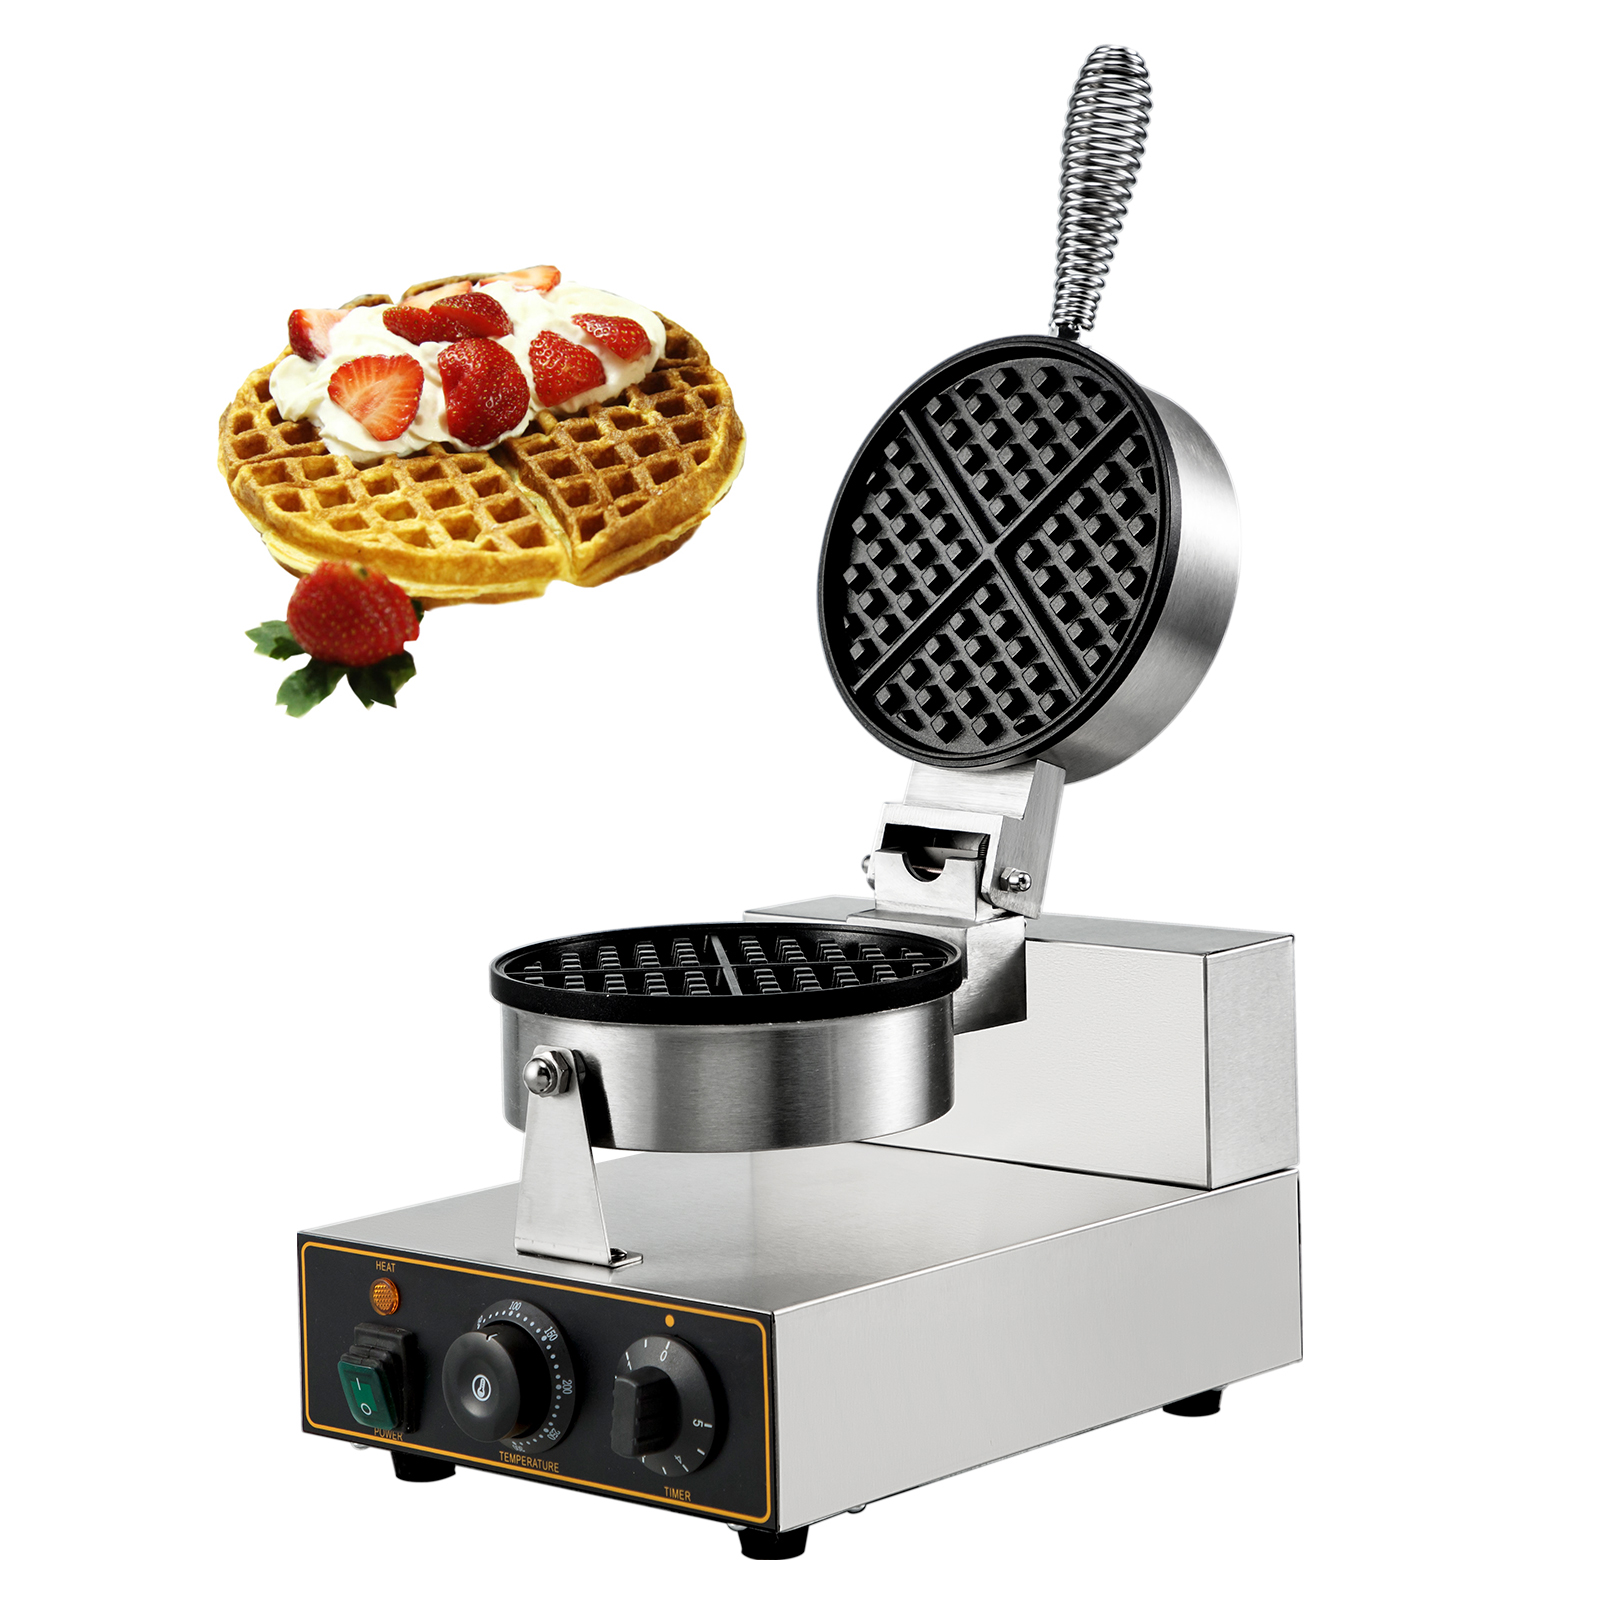 50 a 300 ° C Macchina per Waffle Antiaderente a Testa Singola VEVOR Macchina per Waffle di Riscaldamento Elettrico 1100W Macchina per Waffle in Acciaio Inossidabile Egg Waffle Maker 